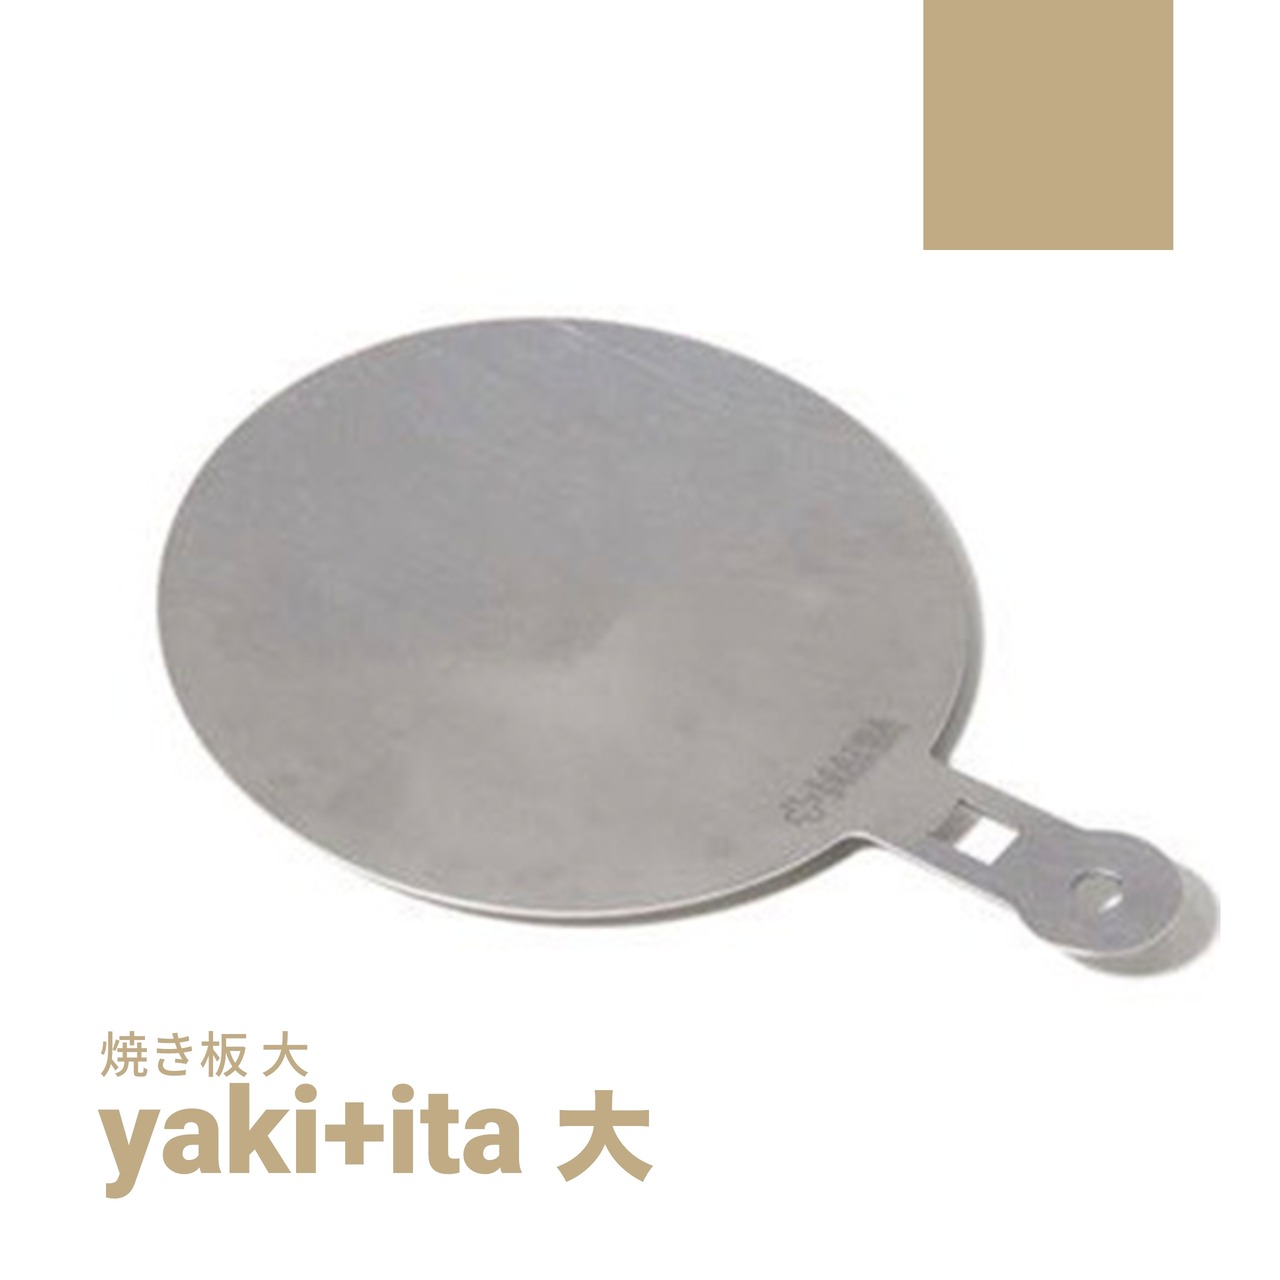 yaki+ita 大 [焼き板 大]